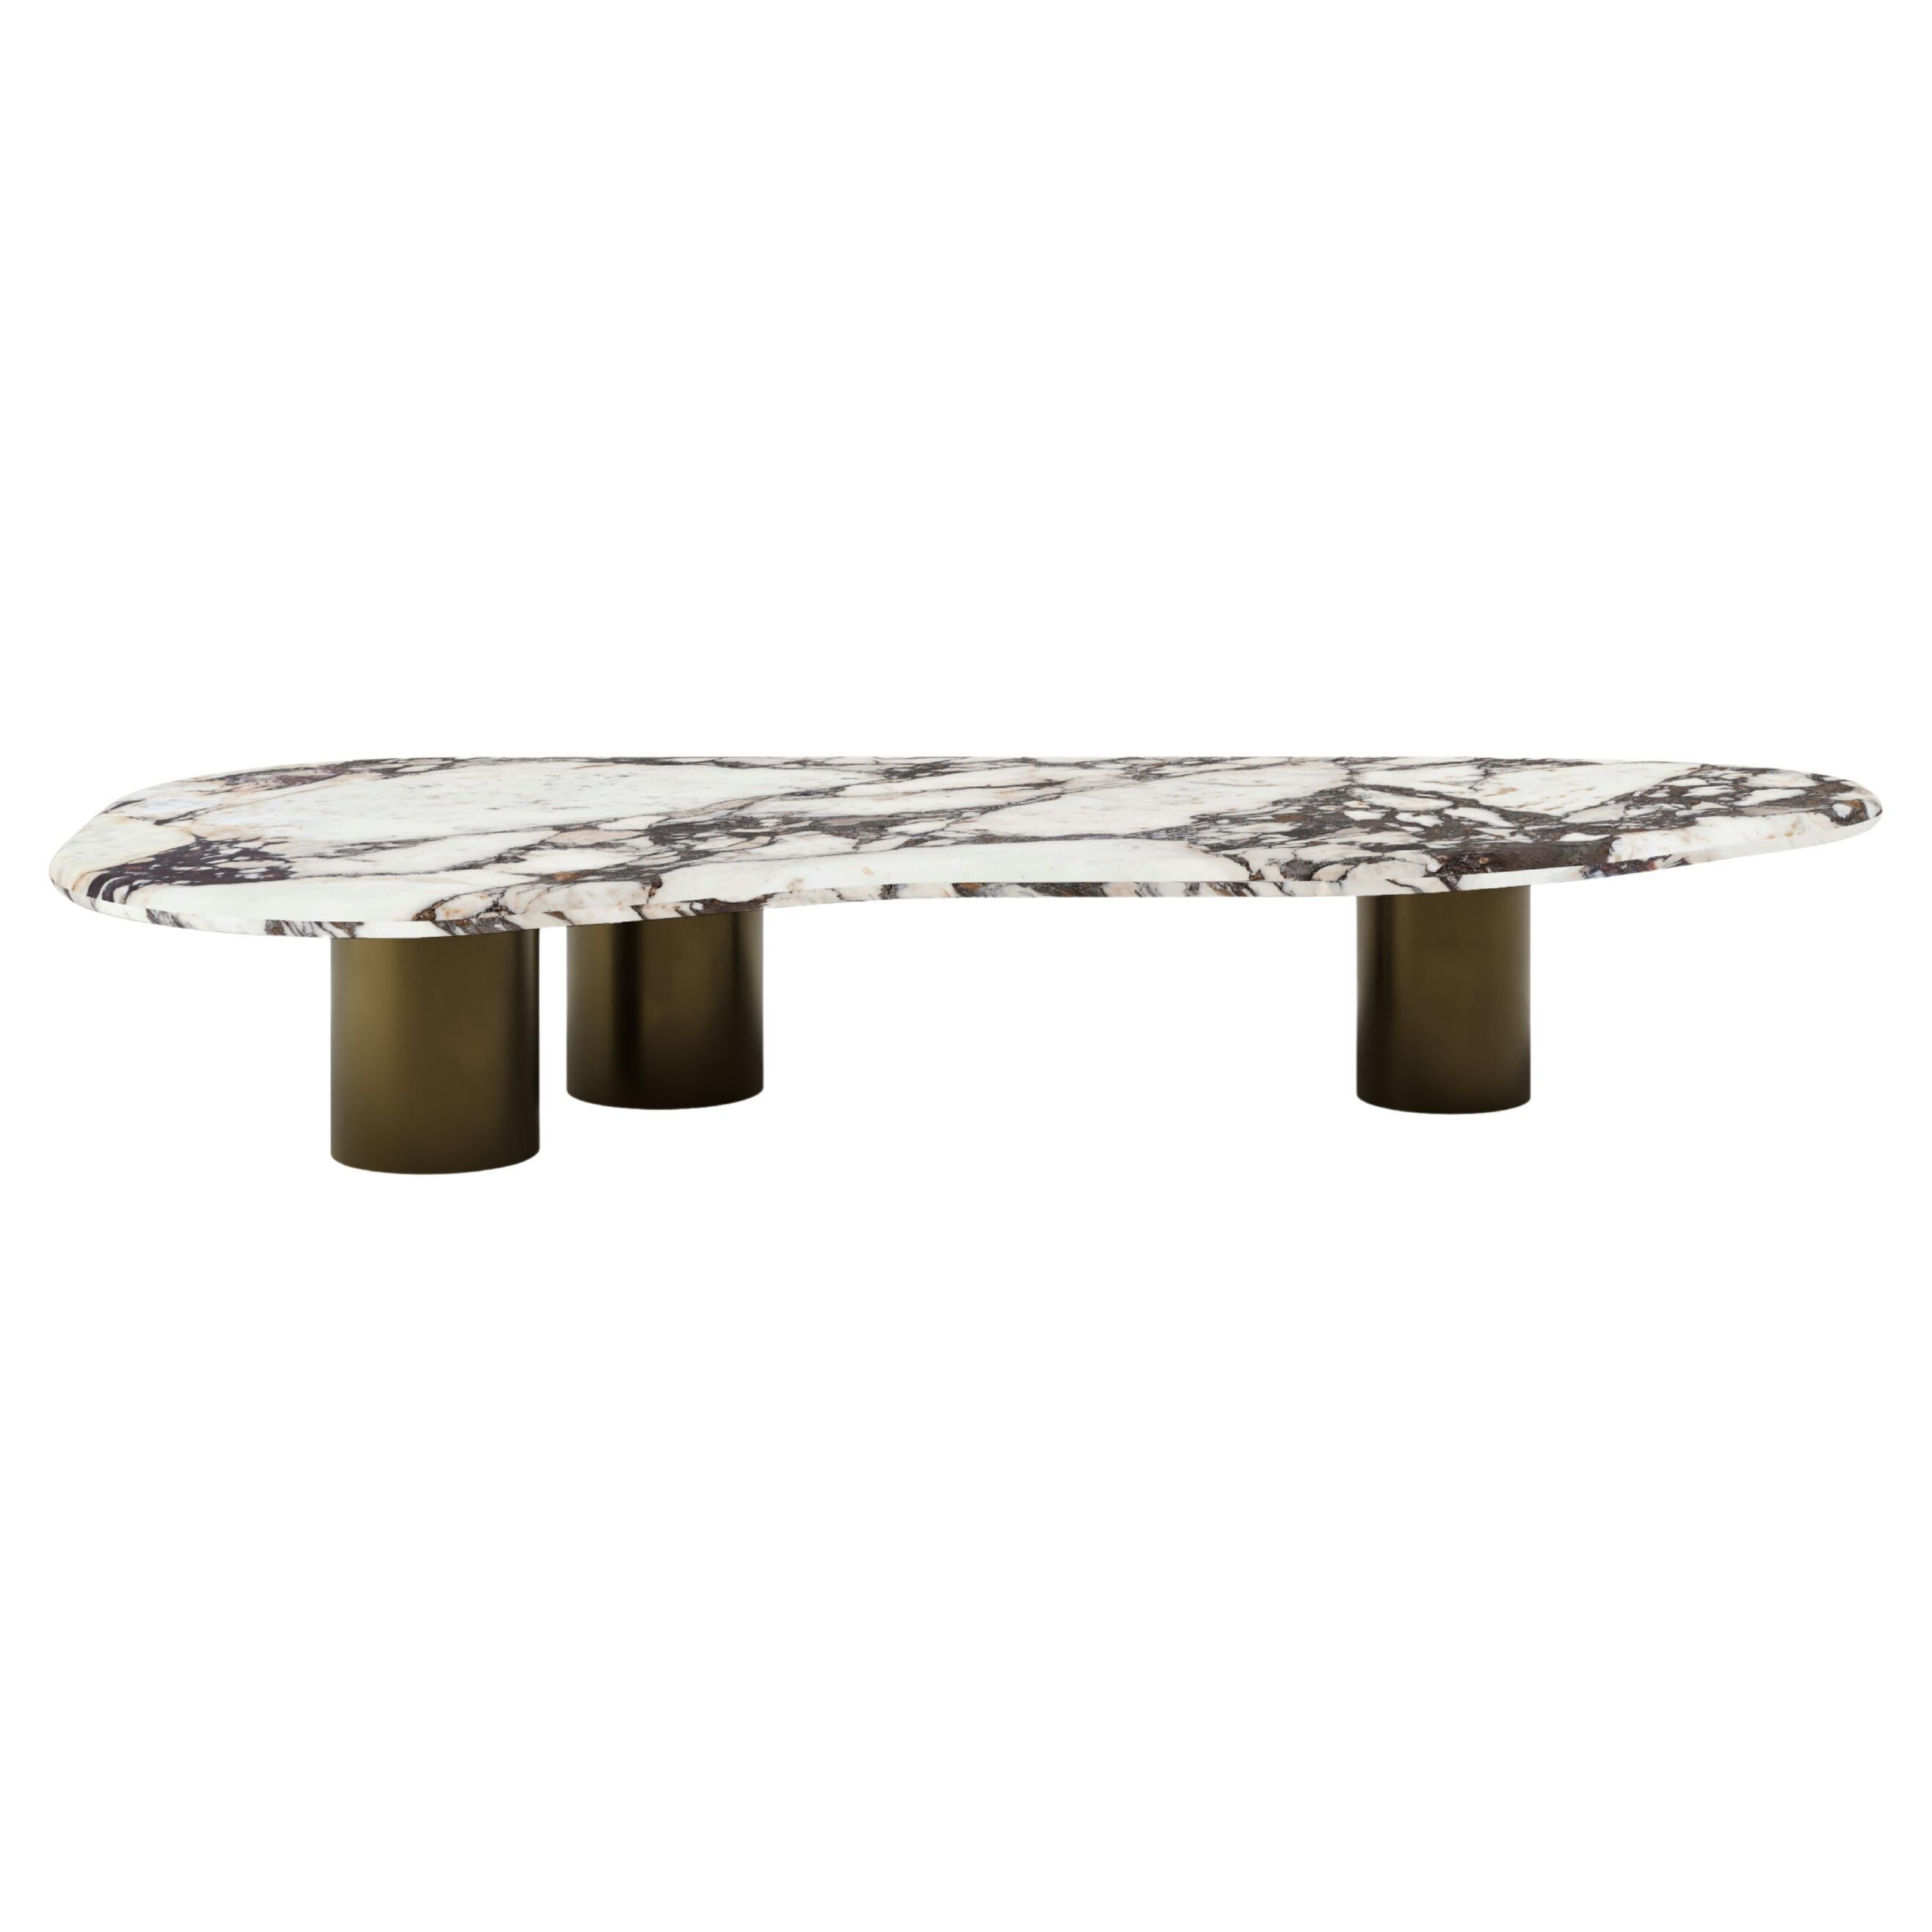 FORM(LA) Lago Freeform Coffee Table 72”L x 36”W x 12”H Viola Marble & Bronze For Sale